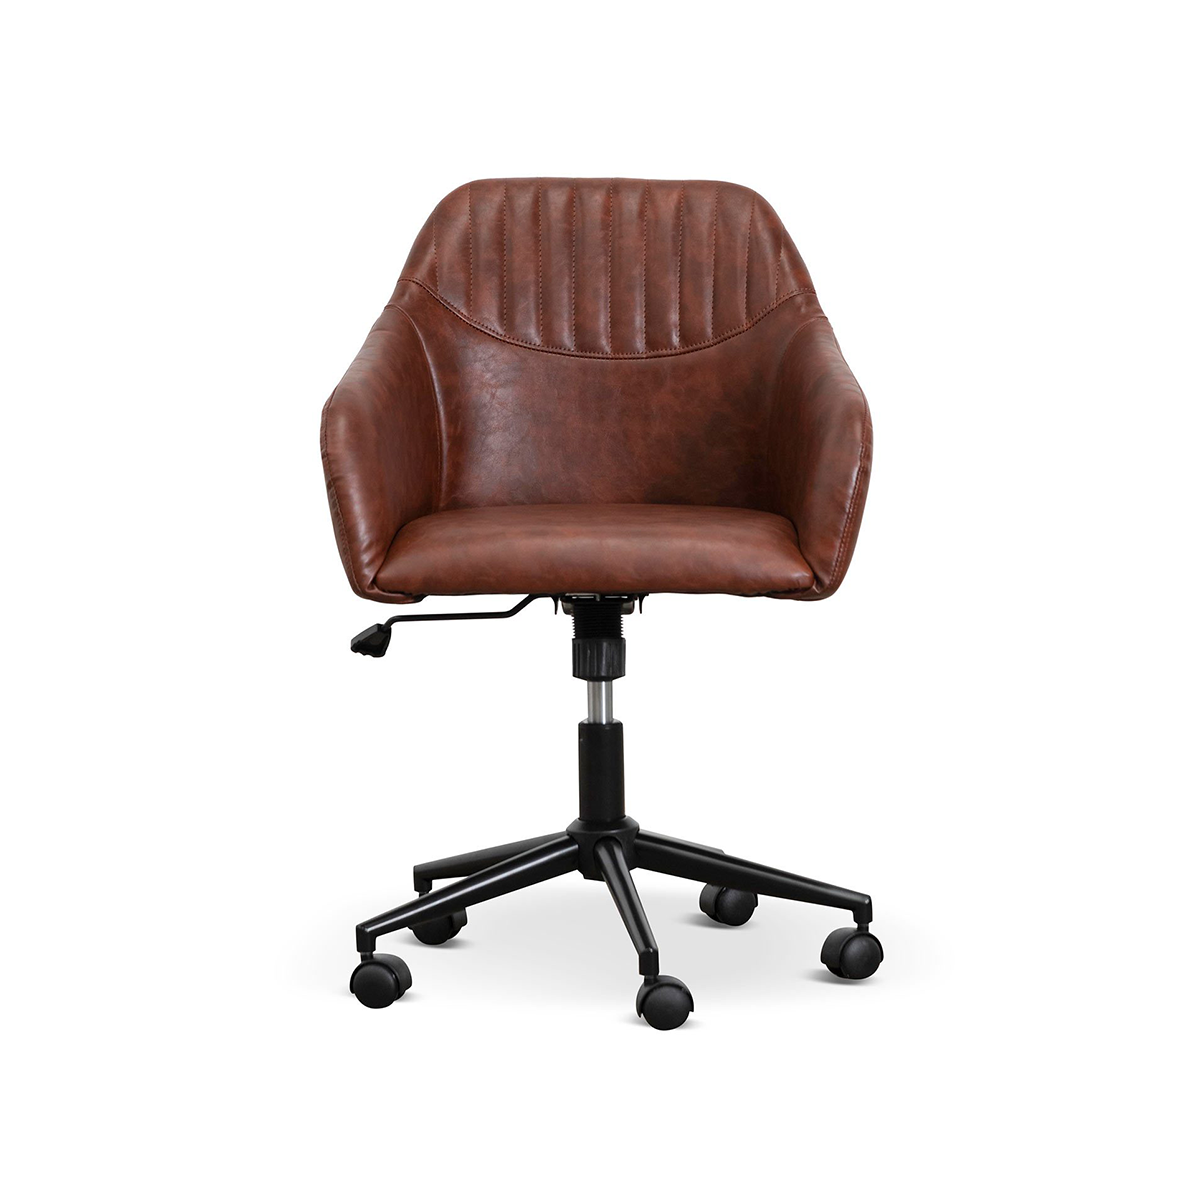 FondHouse Bravo Office Chair - Cinnamon Brown PU Leather